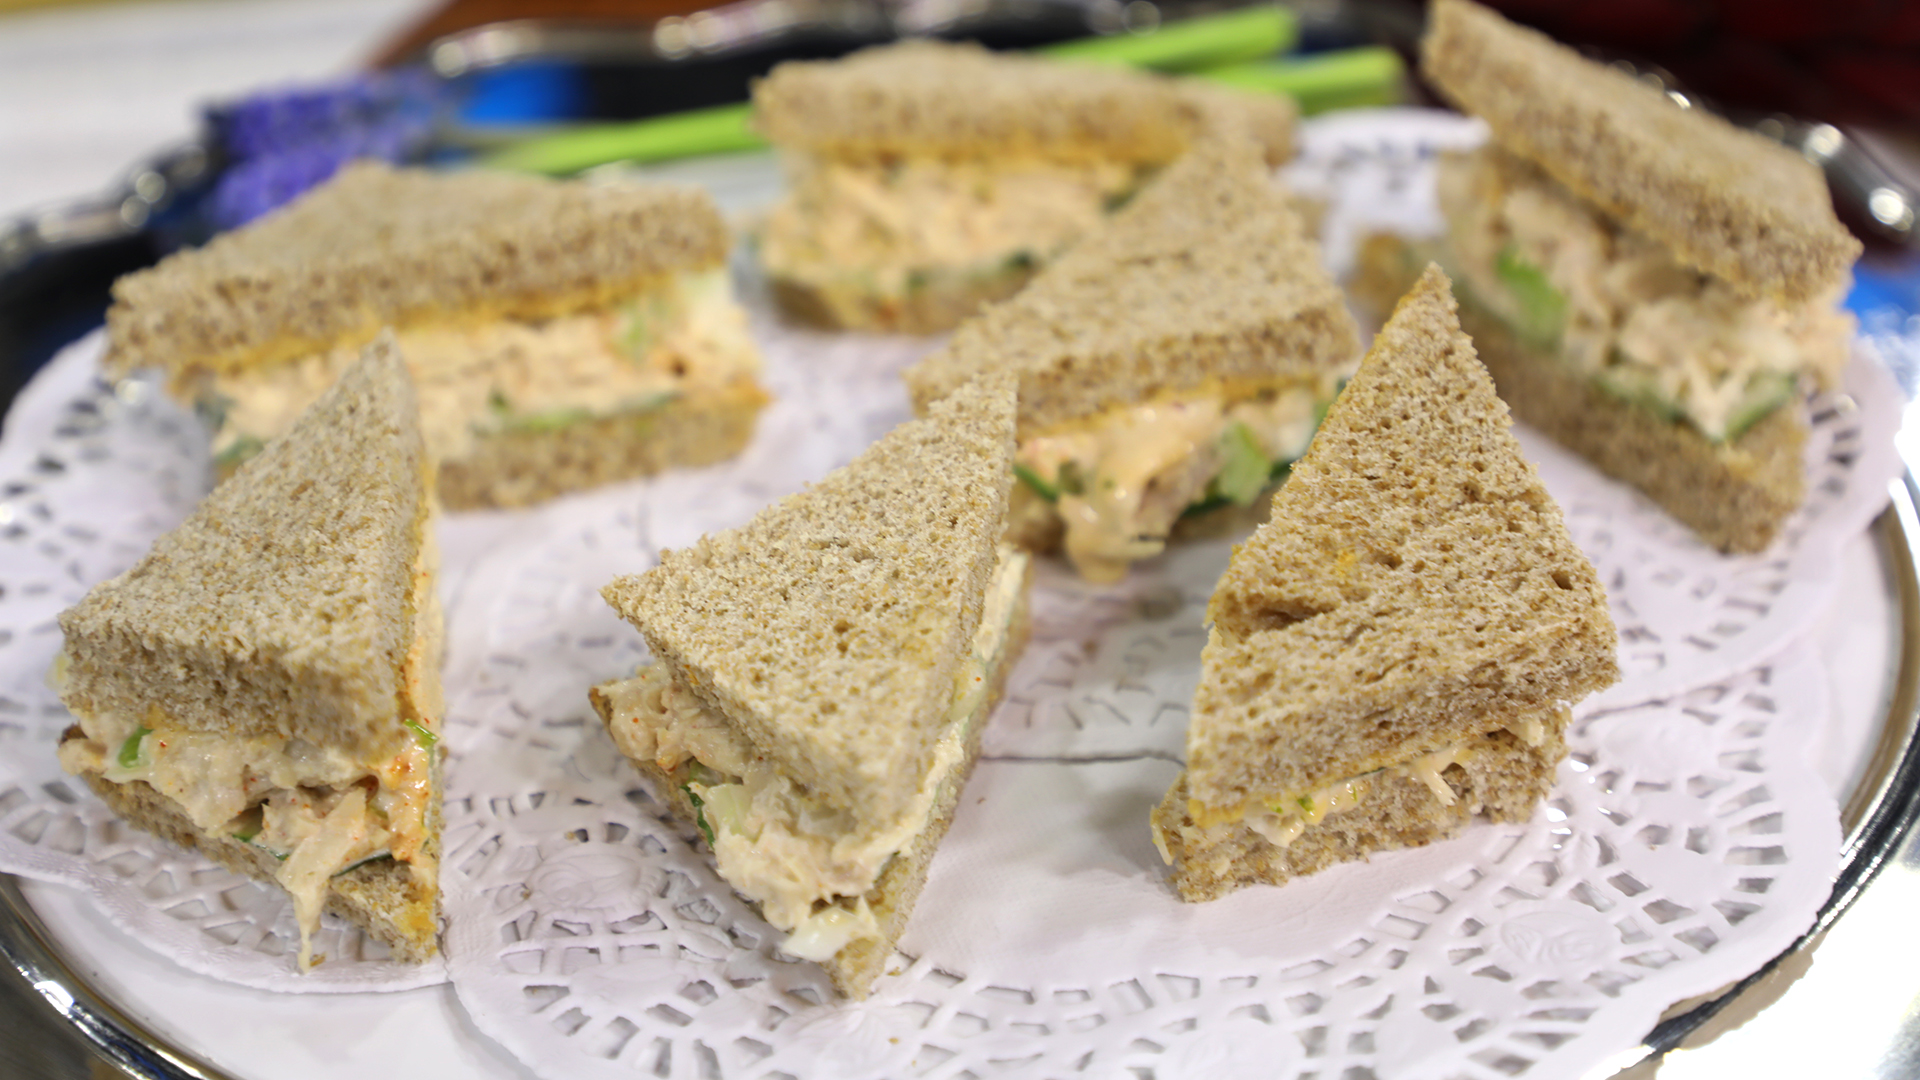 Spicy tuna salad sandwiches